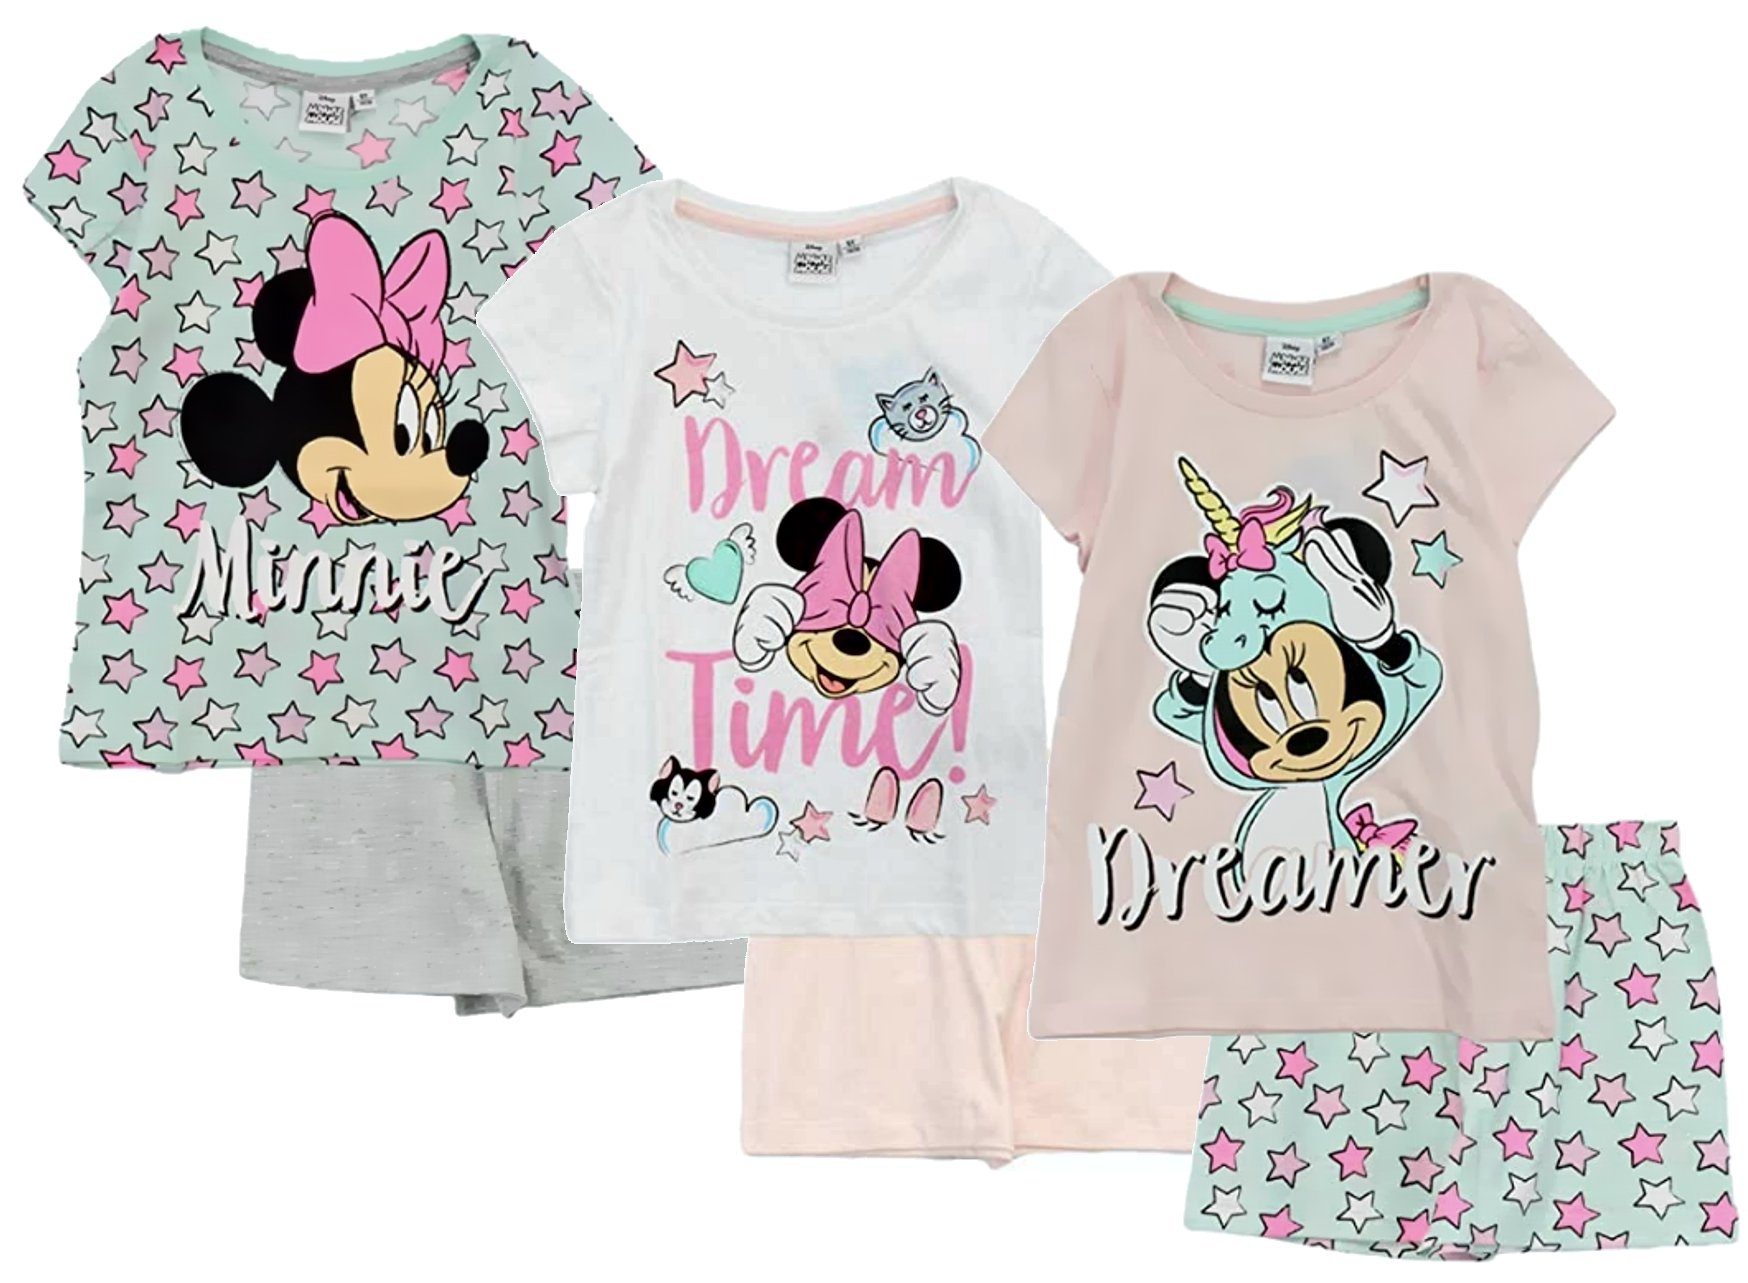 Kinderpyjama 3 Minnie 128 116 Hose Pyjama 6 kurz 4 8 Hose 5 cm + Minnie Disney Pyjama Schlafanzug Mouse Jahre Mädchen Pyjama Mouse 98 104 Rose mit ShortY 110 T-Sirt